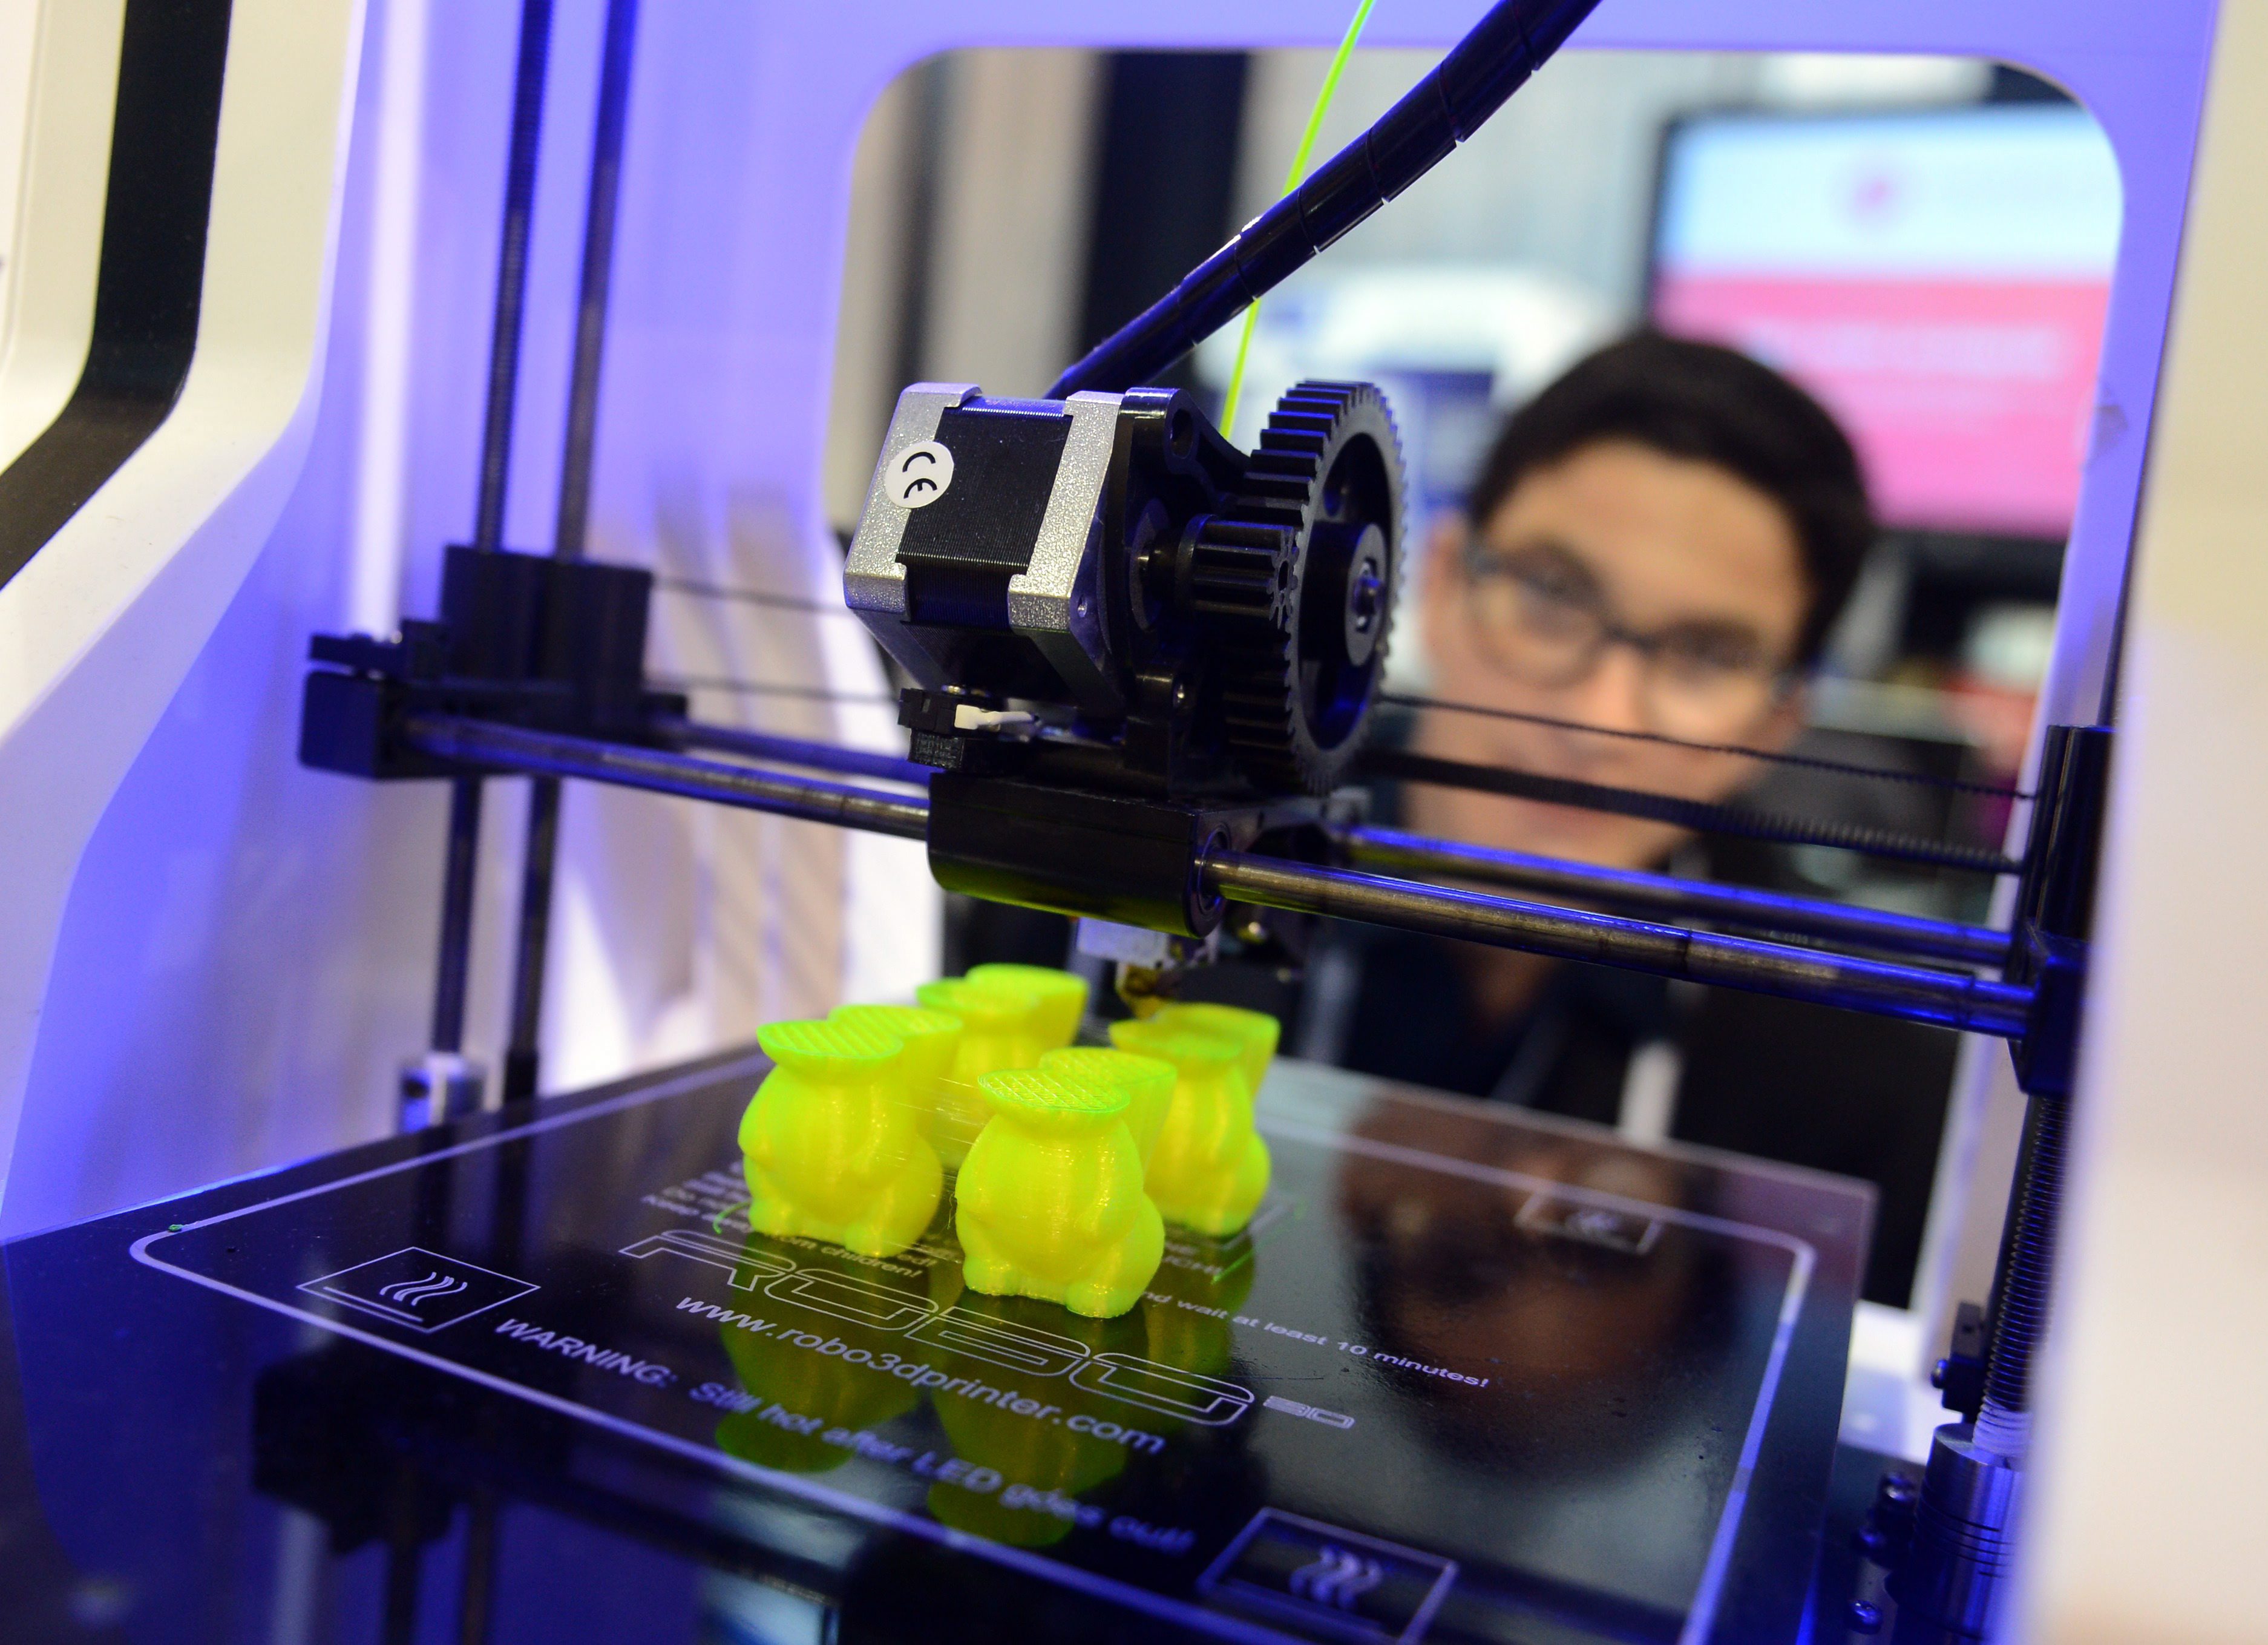 Японецът купил 3D принтера за около 600 долара (сн. архив)